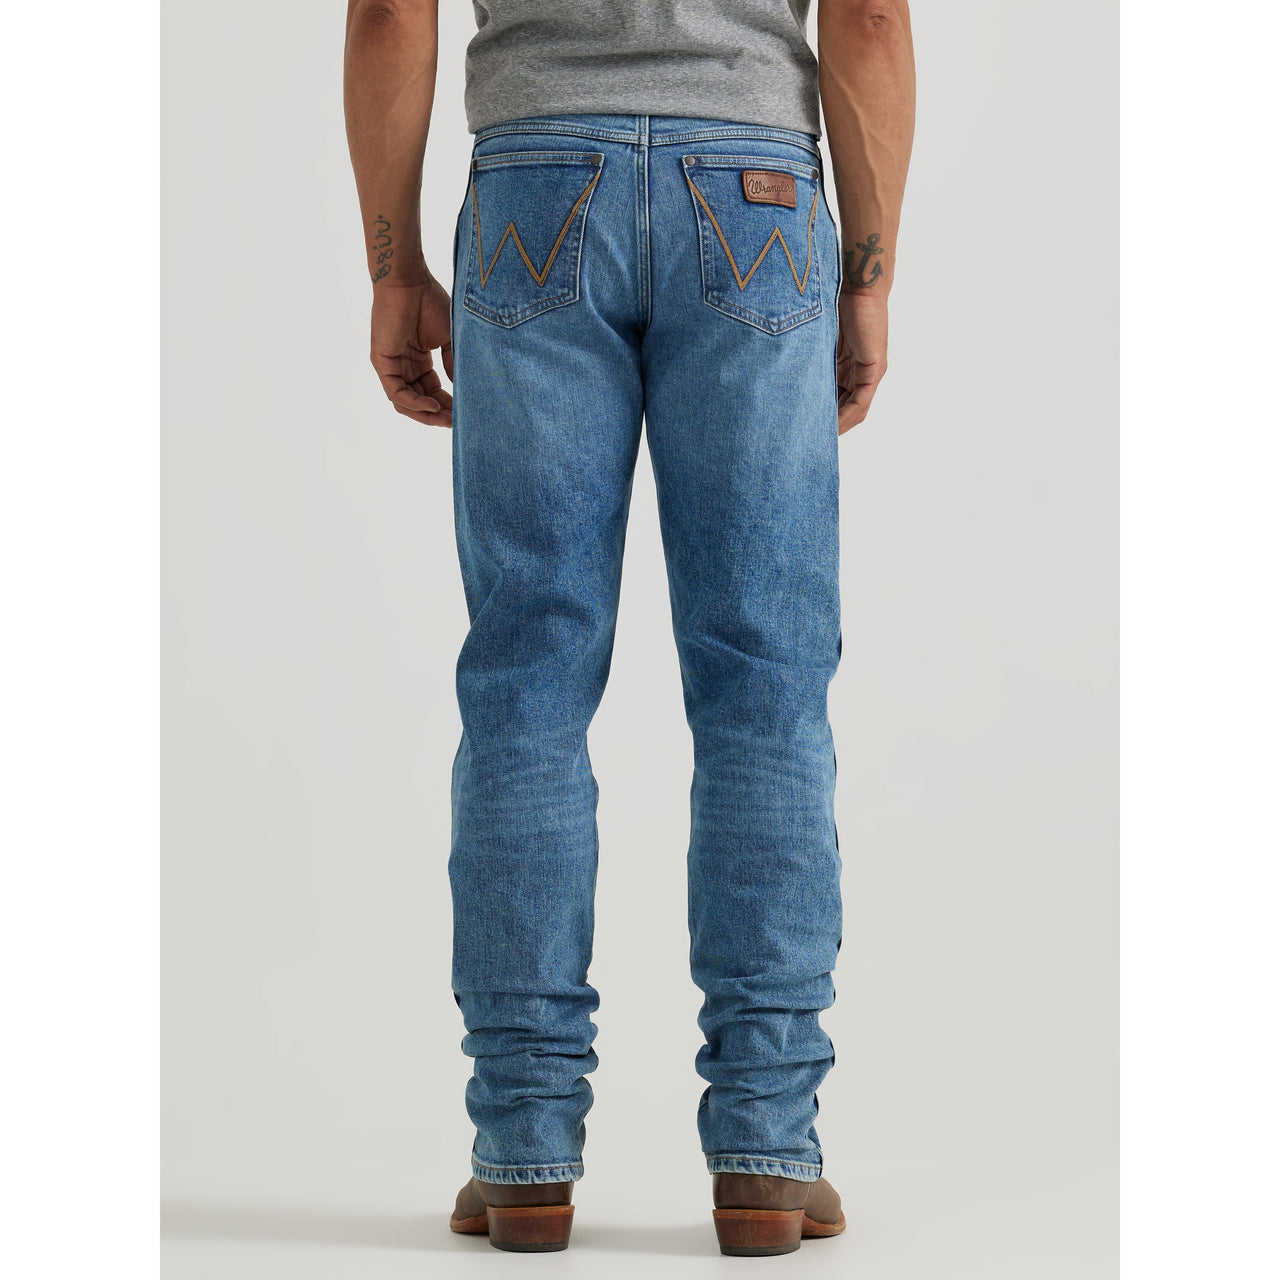 Wrangler Men's Retro Slim Straight Jeans -